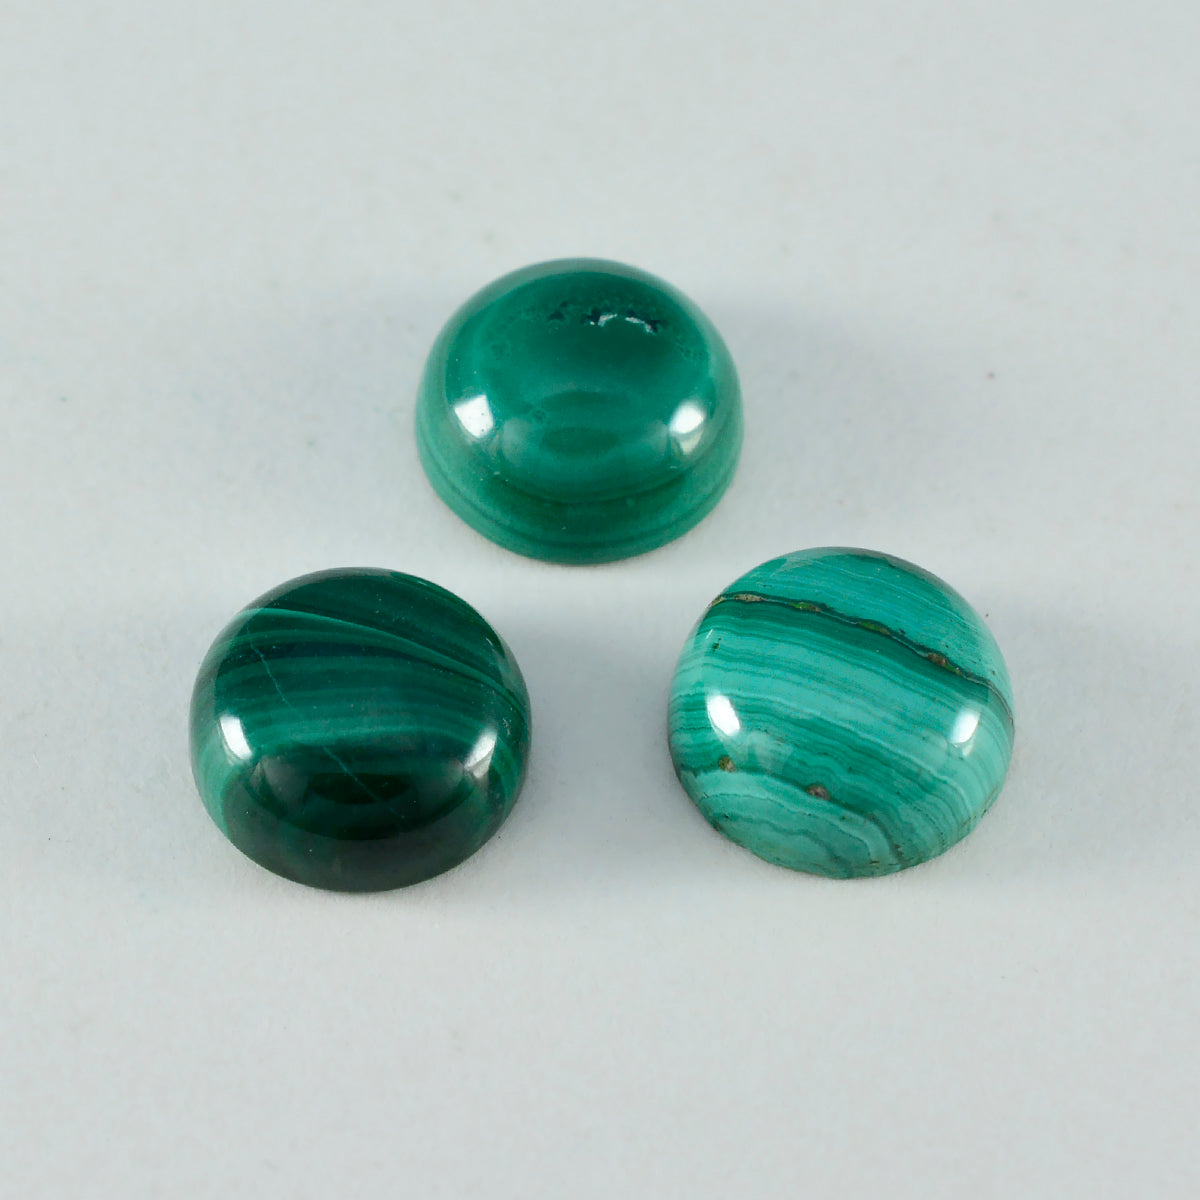 Riyogems 1PC Green Malachite Cabochon 13x13 mm Round Shape startling Quality Gemstone